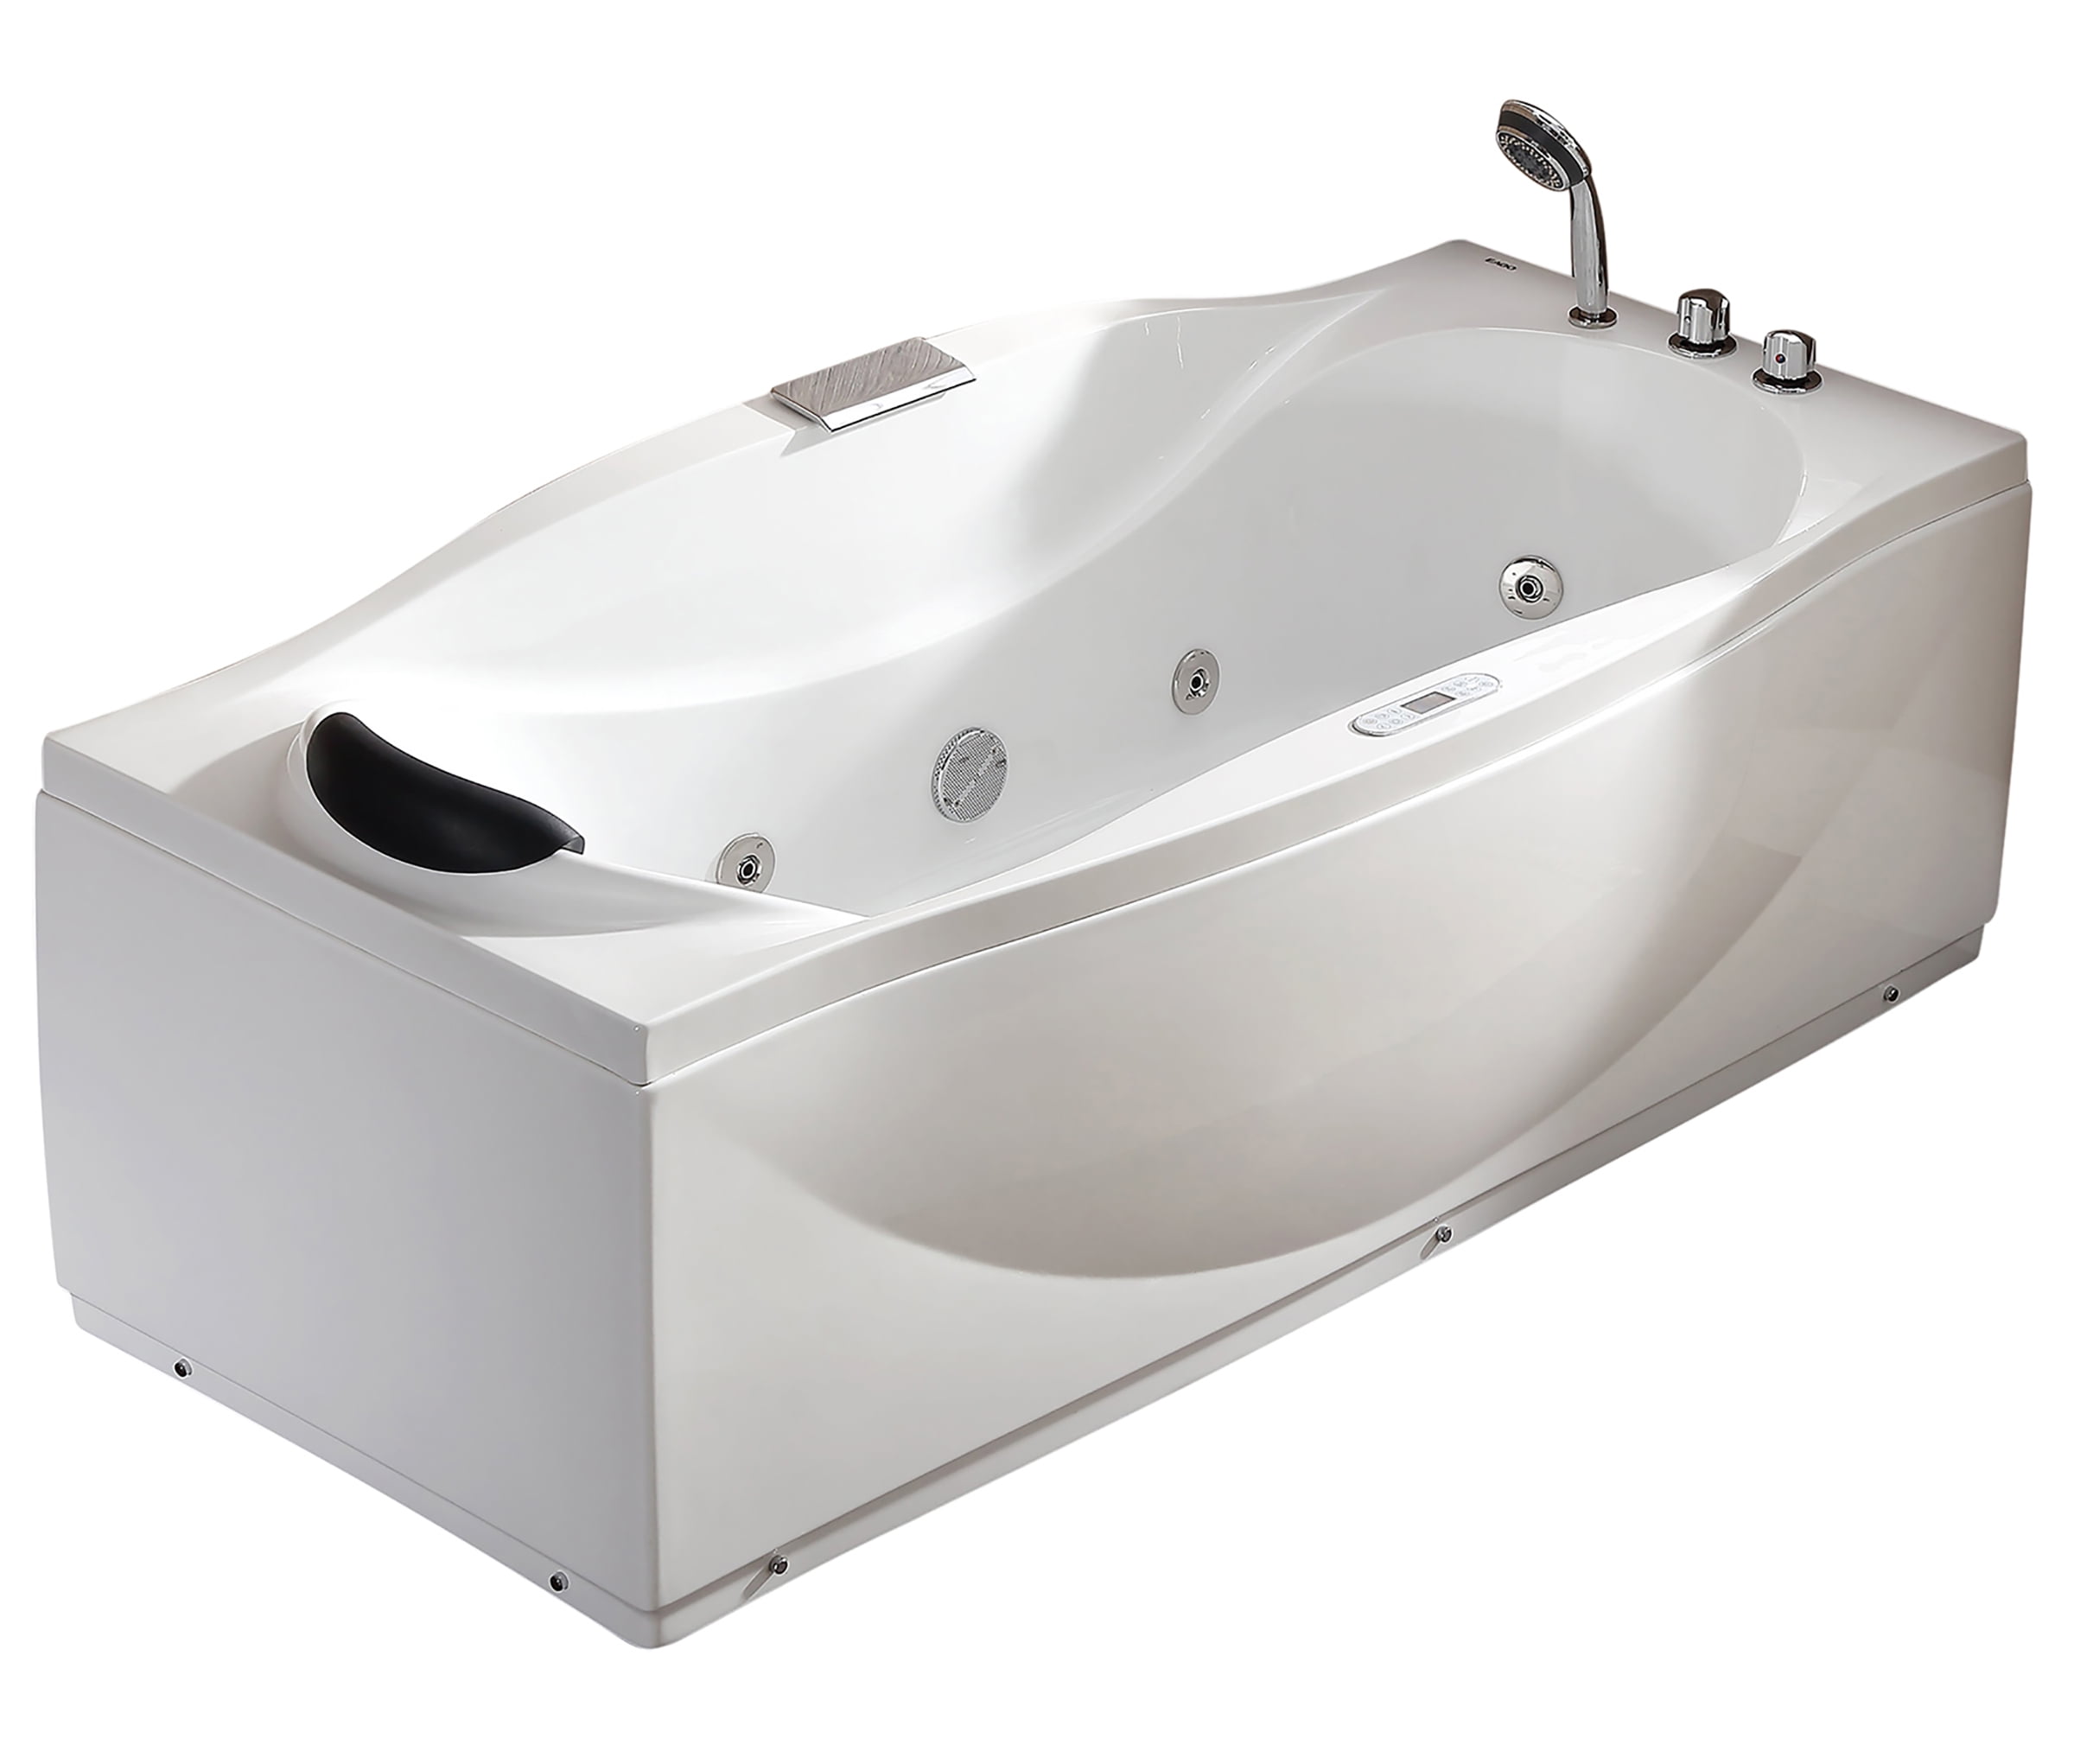 Am189etl-r 6 Ft. Right Drain Acrylic White Whirlpool Bathtub With Fixtures